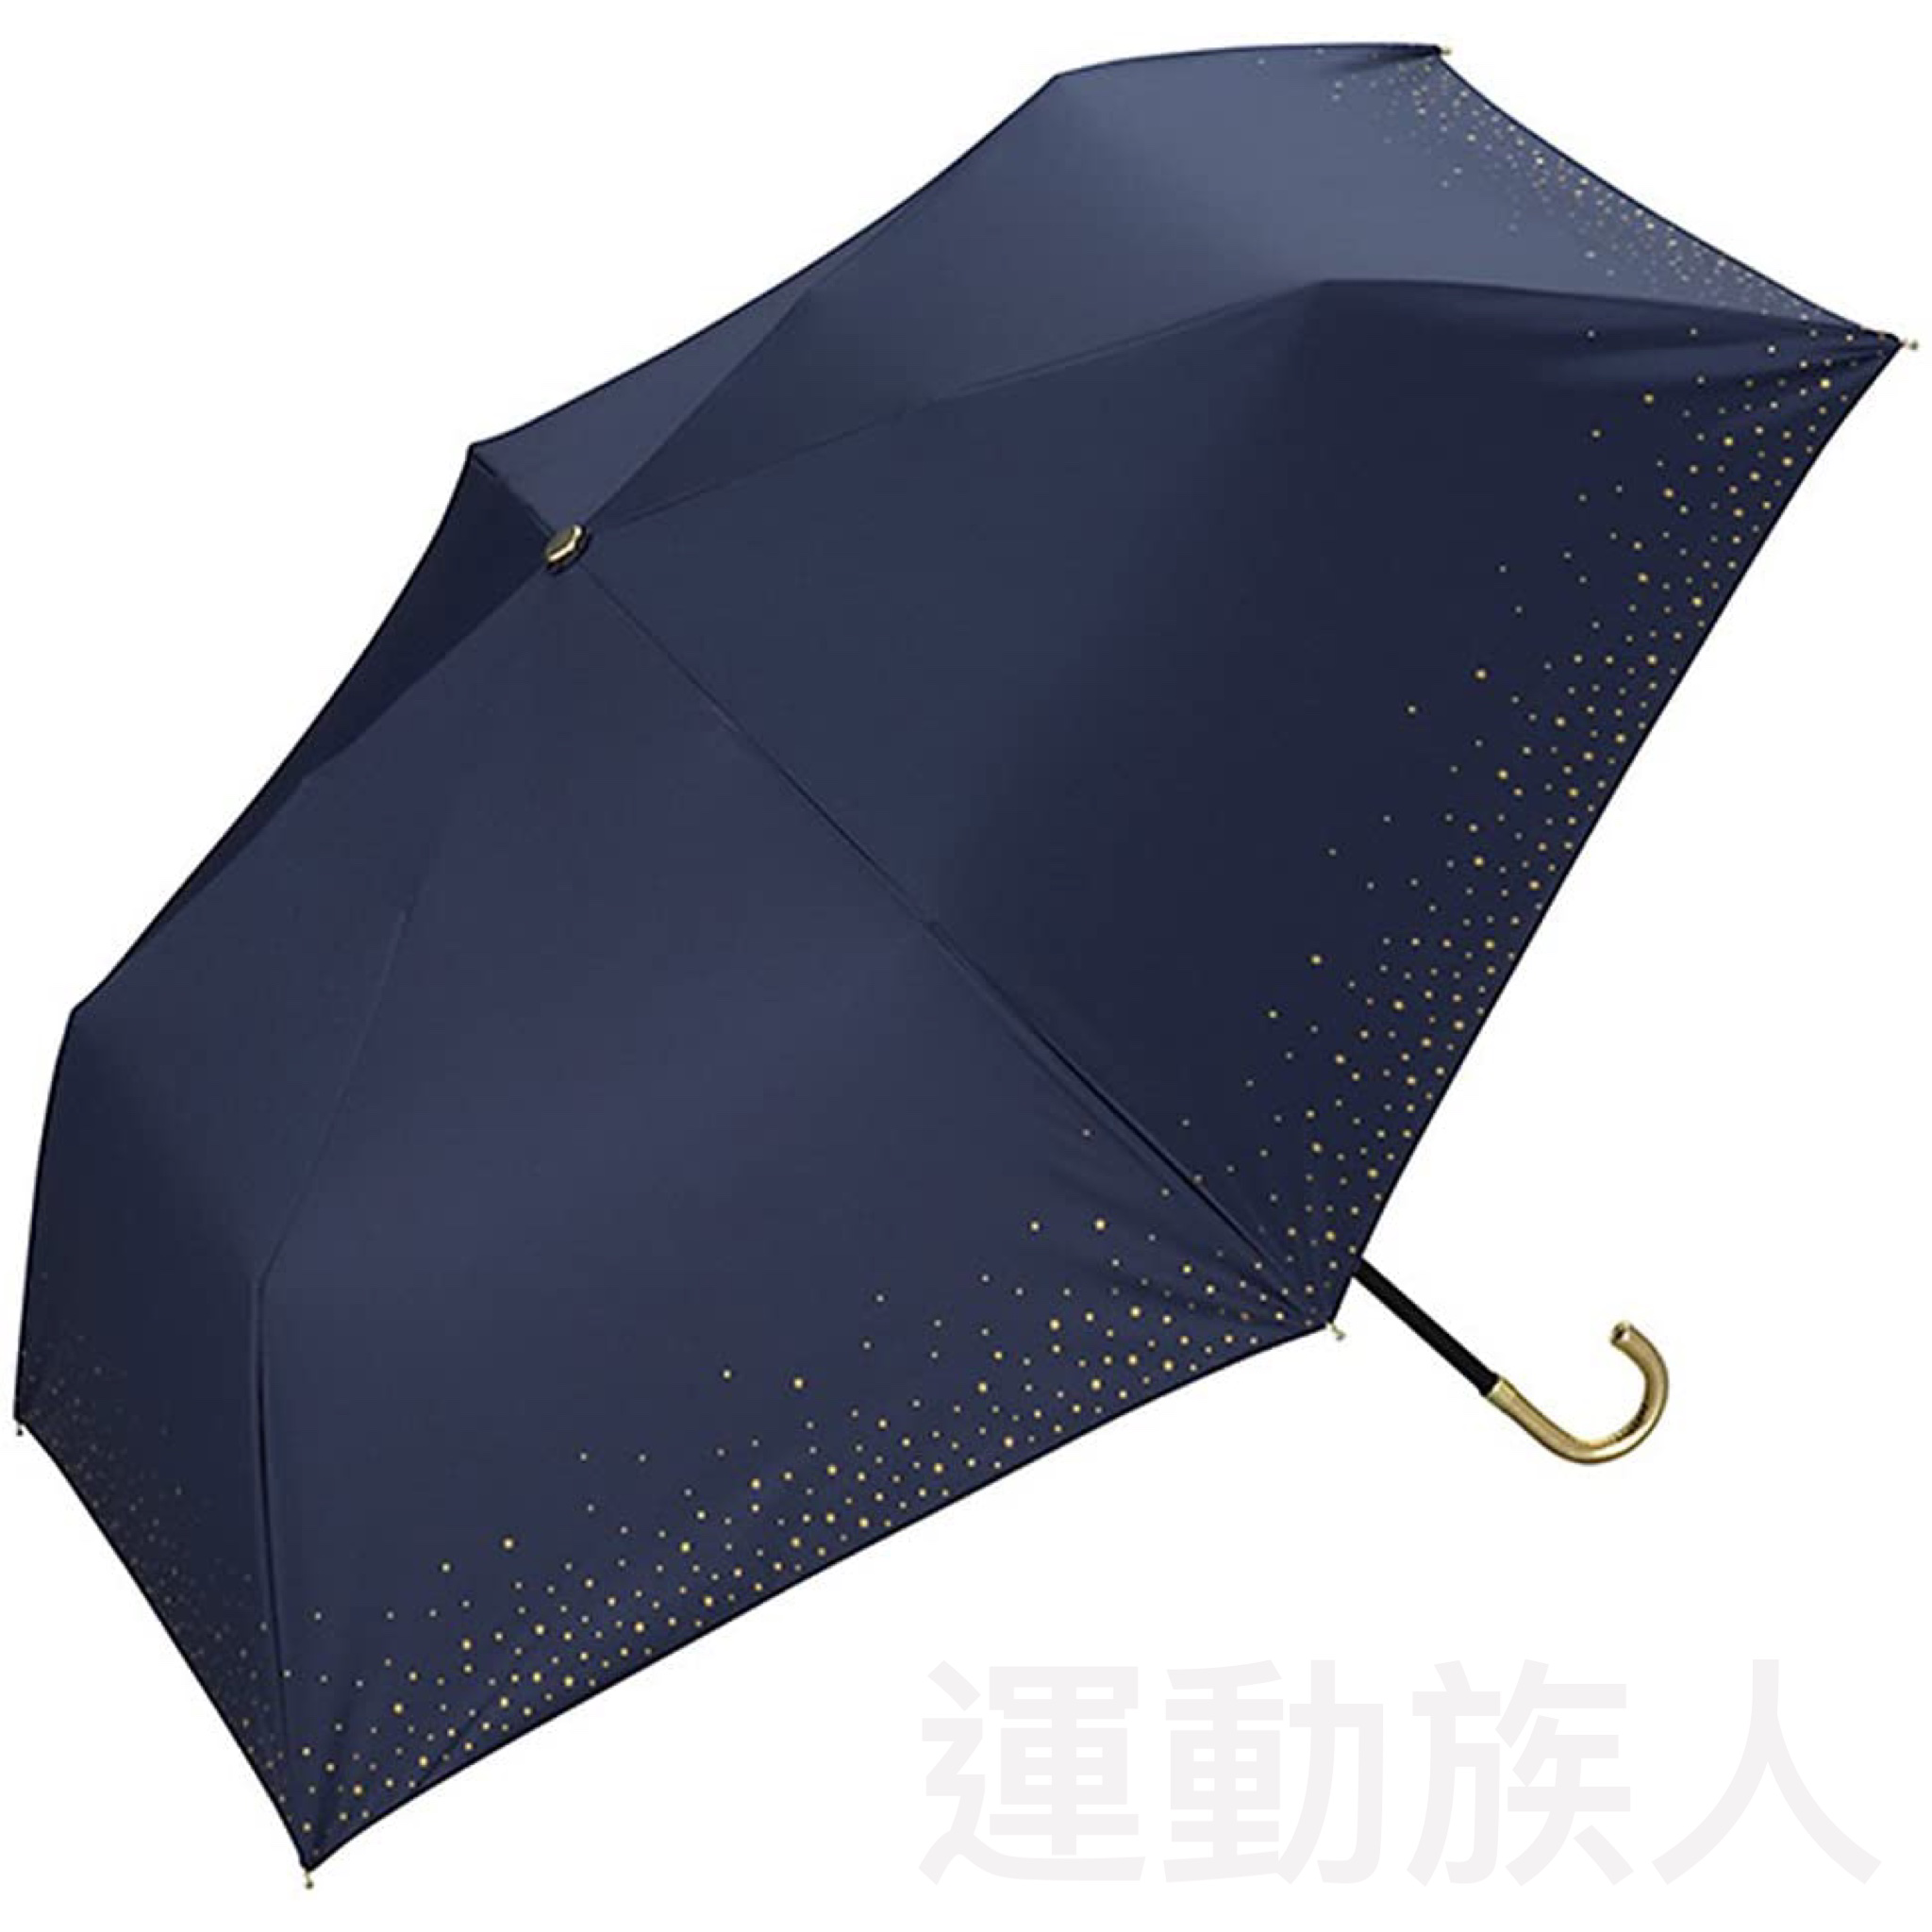 【 W.P.C. 雨傘系列】Wpc. 晴雨兼用防UV 防水短雨傘折疊傘縮骨遮 